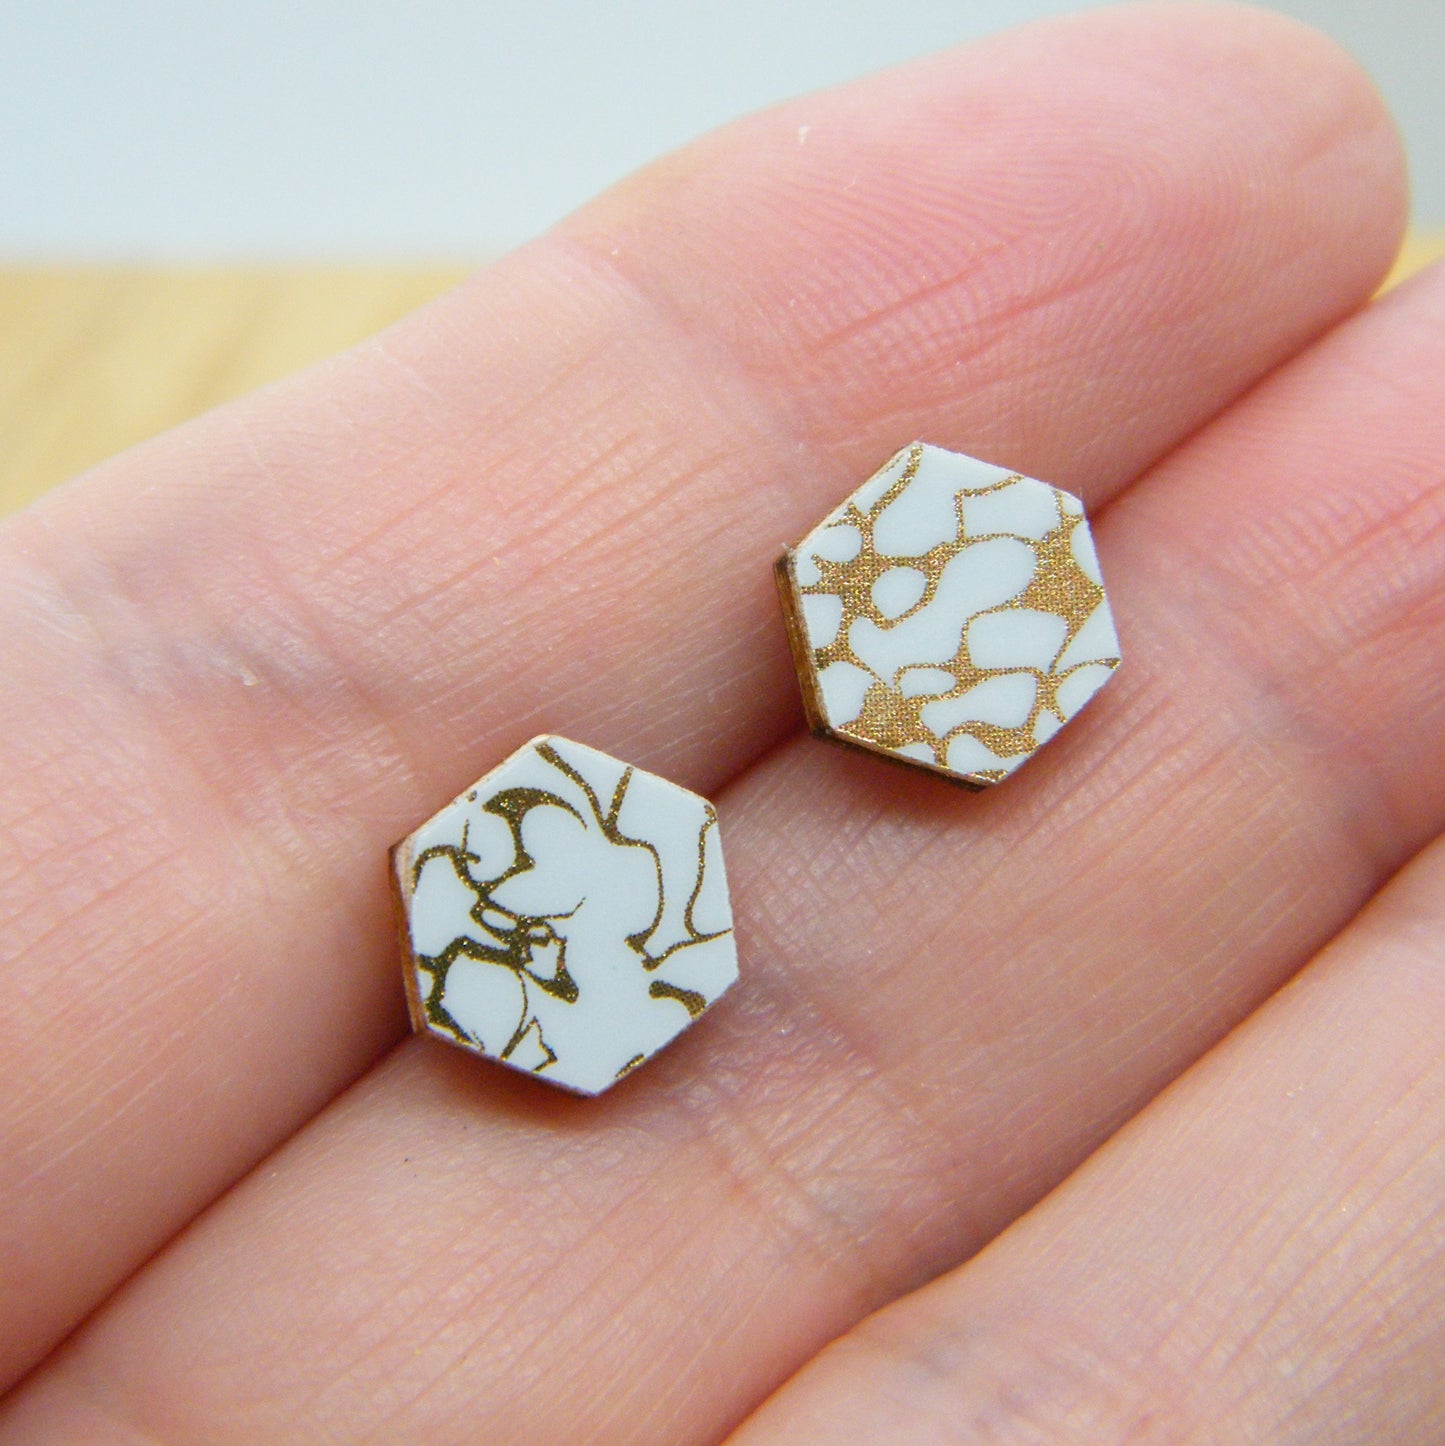 Gold Marble earrings